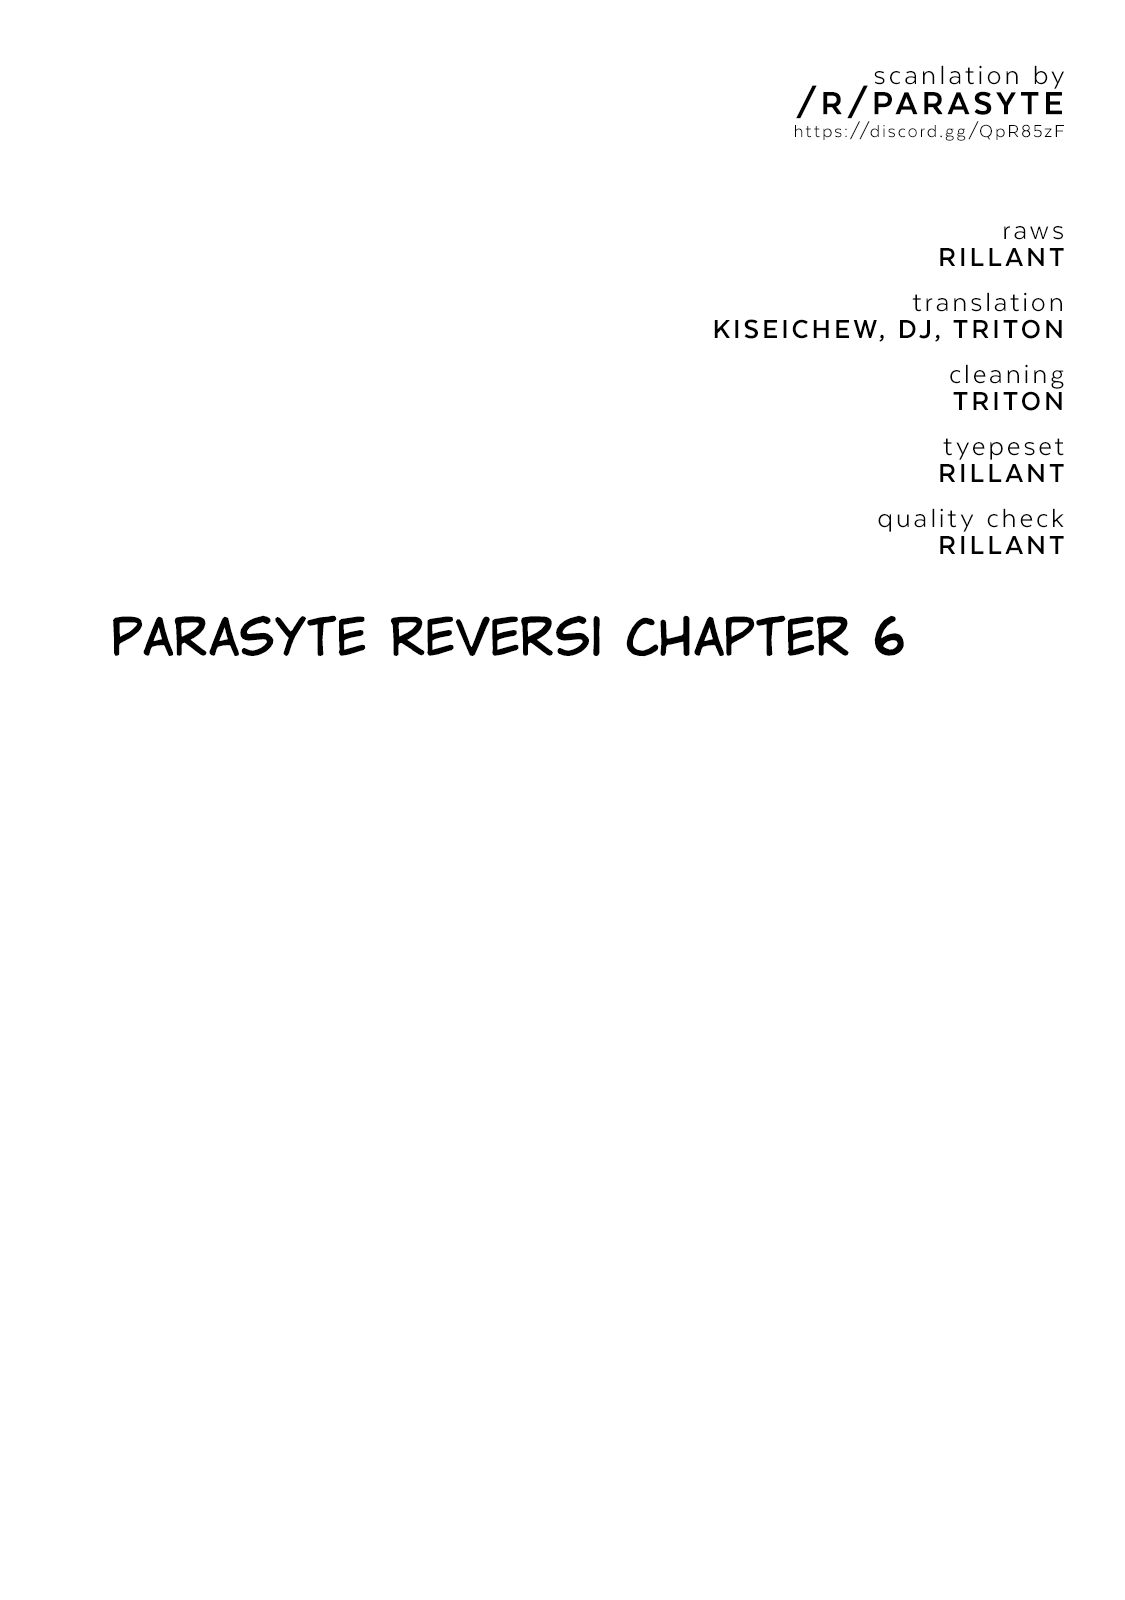 Parasyte Reversi Vol. 1 Ch. 6 Signs